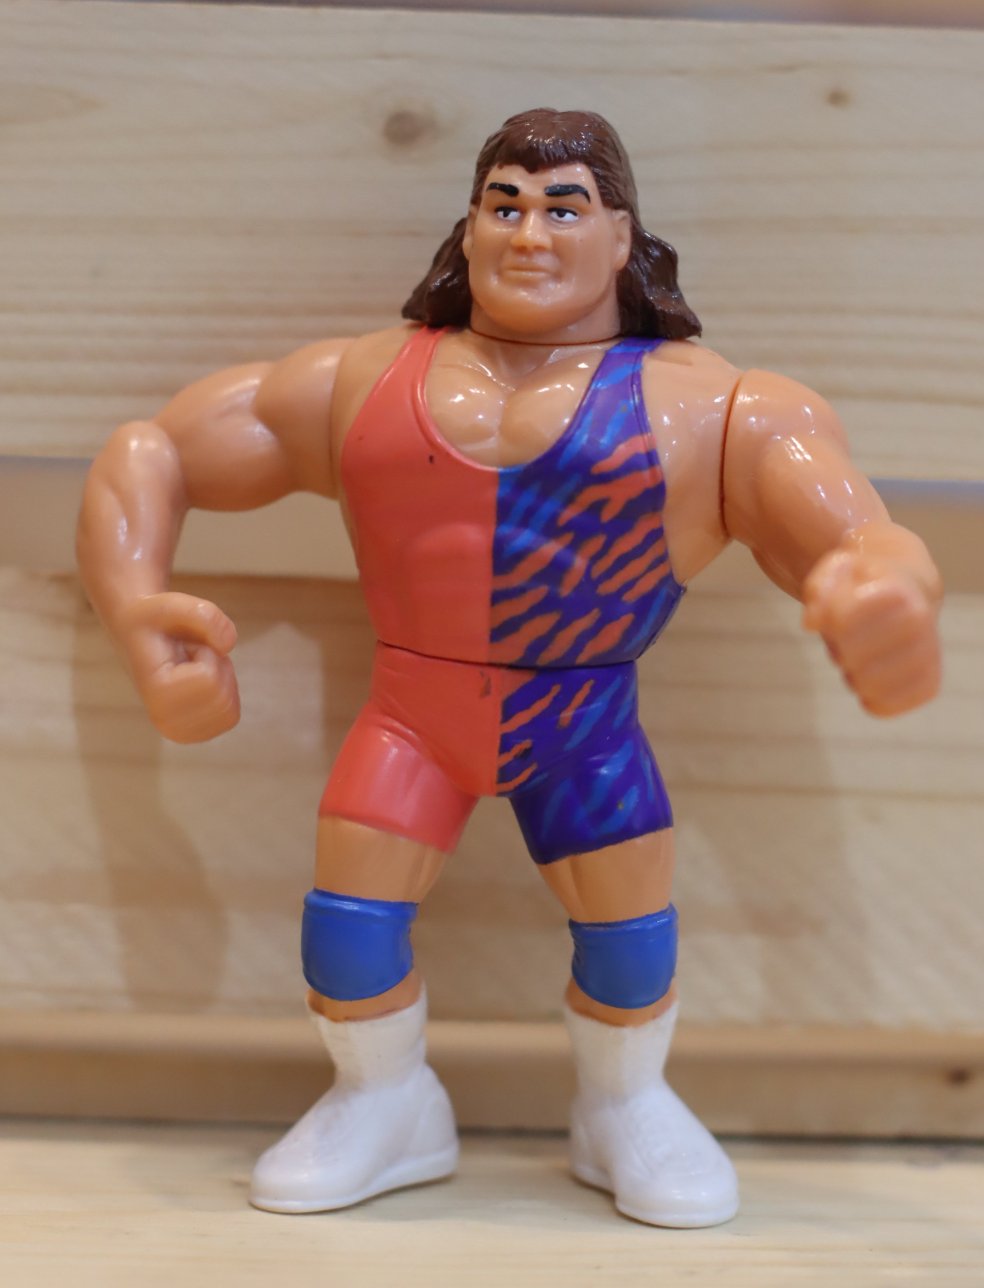 1992 Hasbro Scott Steiner Loose WWF Wrestling Figure Mint!